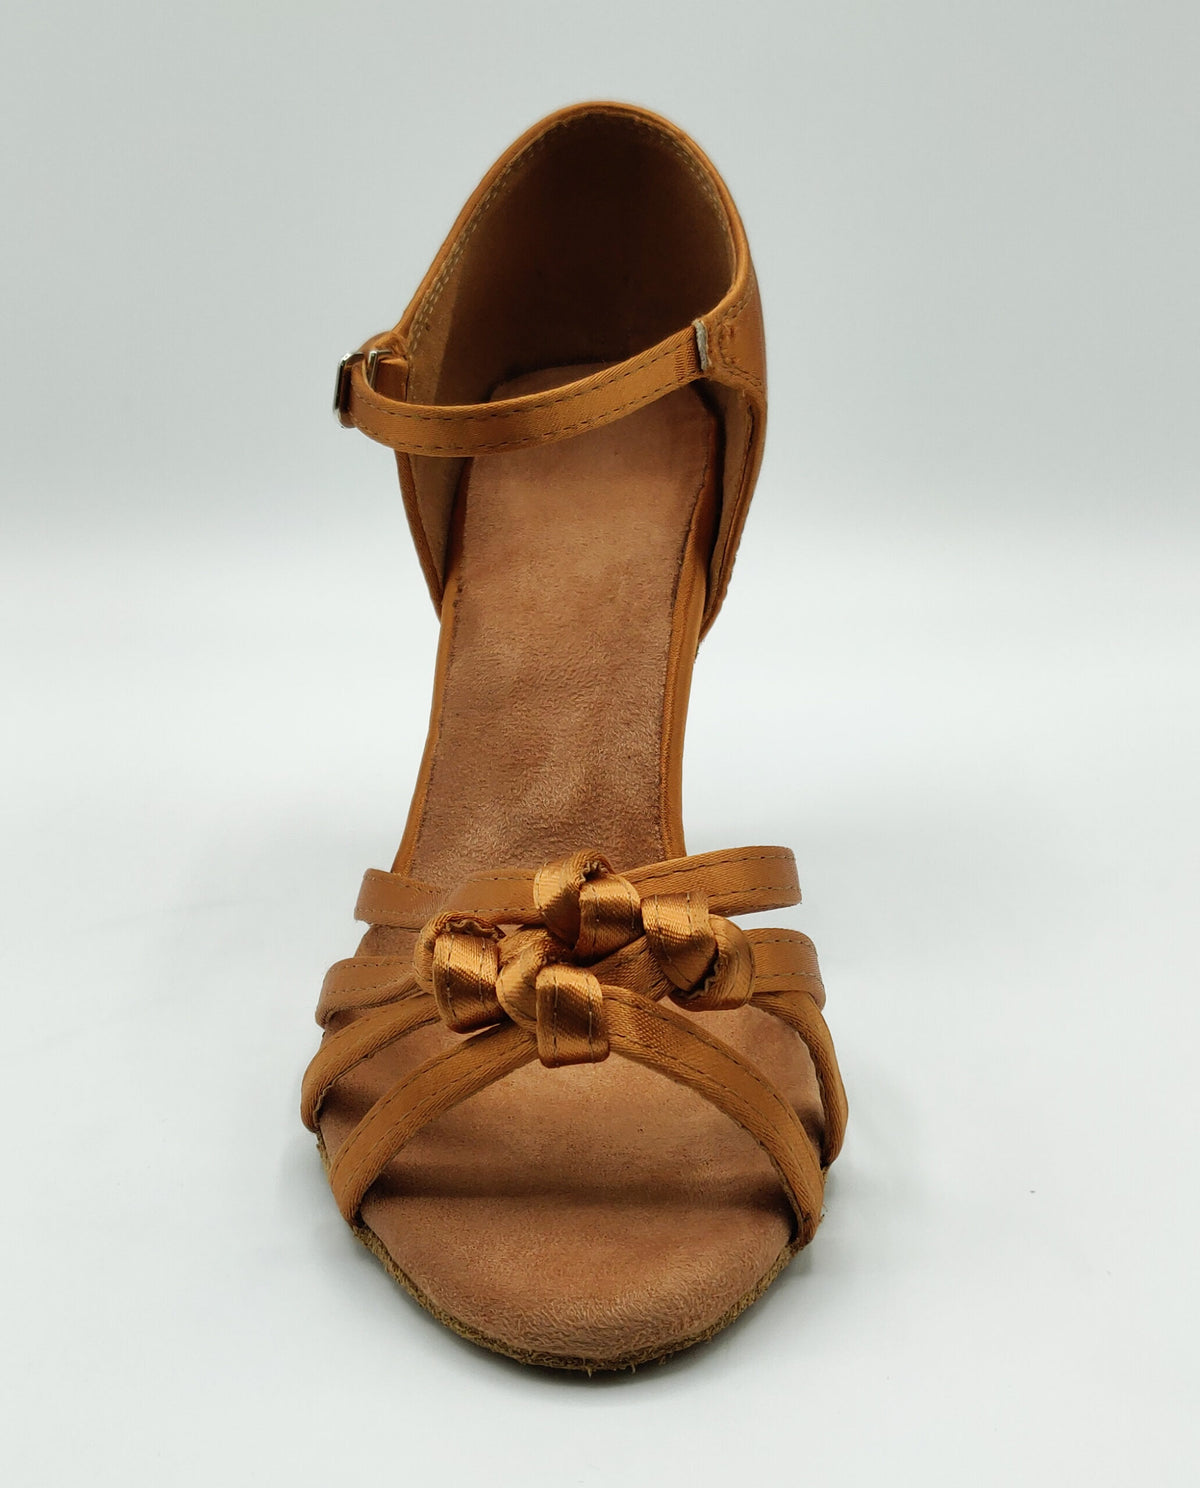 Size 35 bronze shoes 1